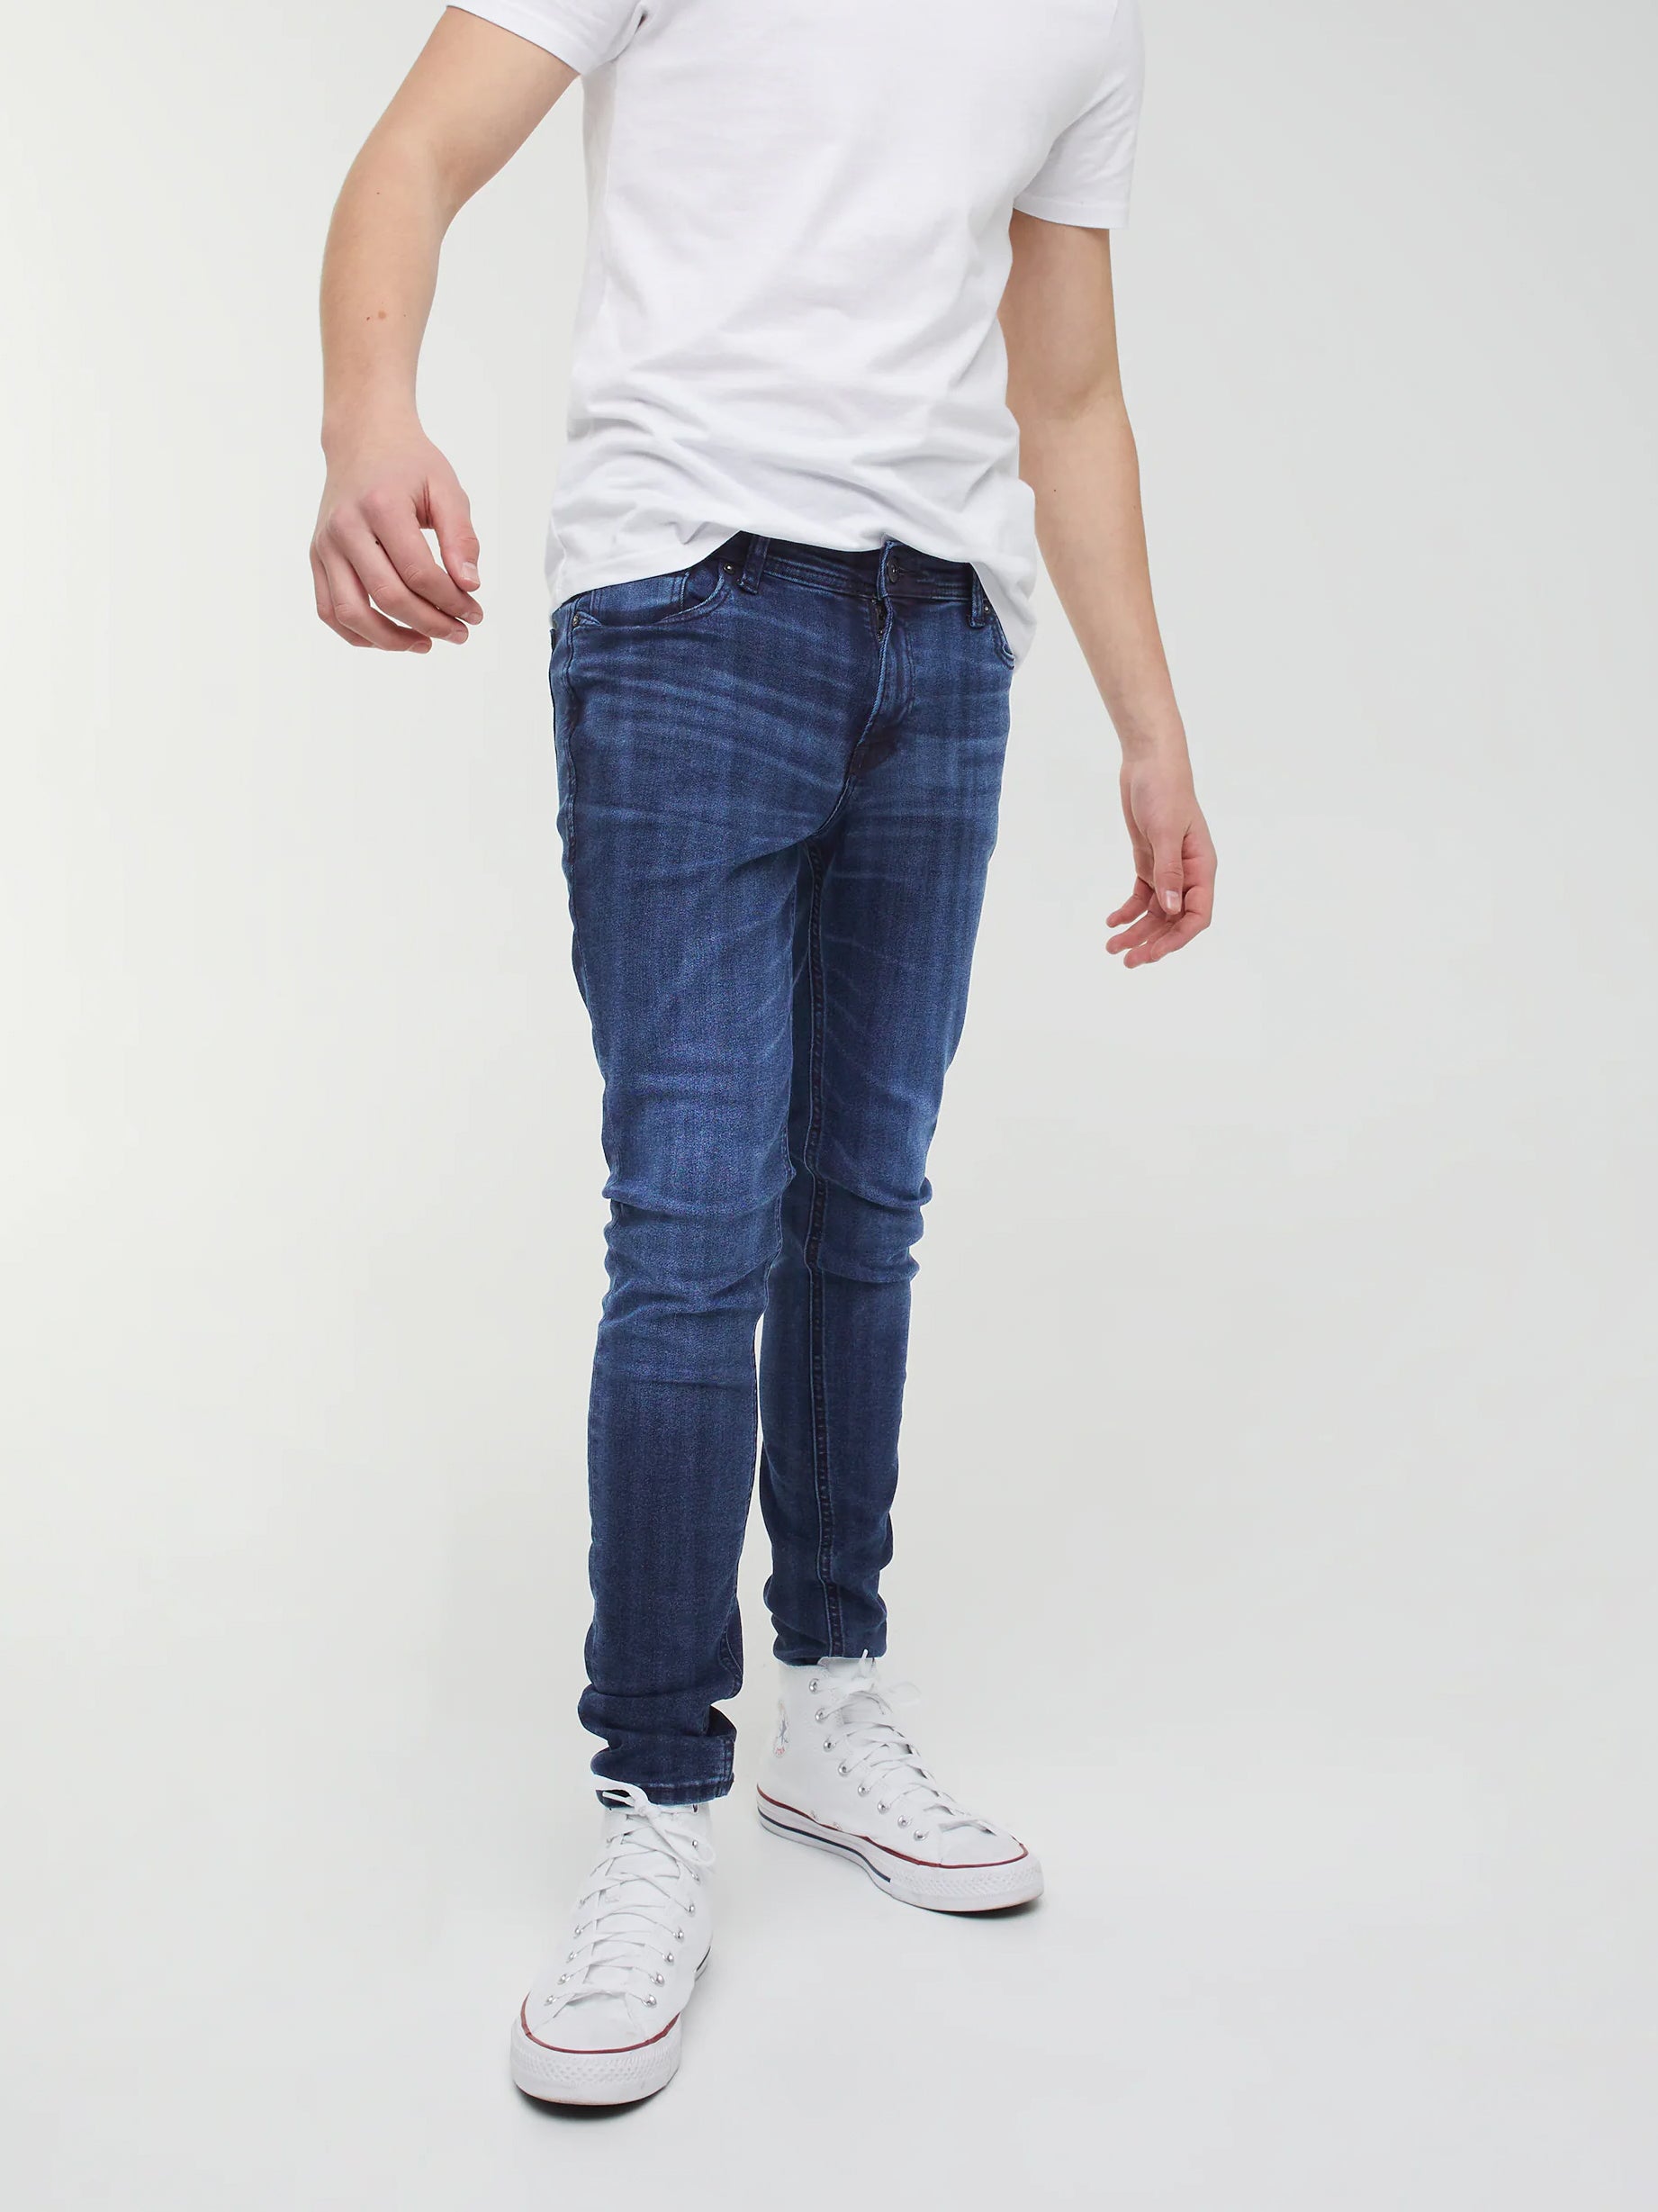 Bohuman Curle Jeans For Men-Blue-CSD191 - Brandsroots